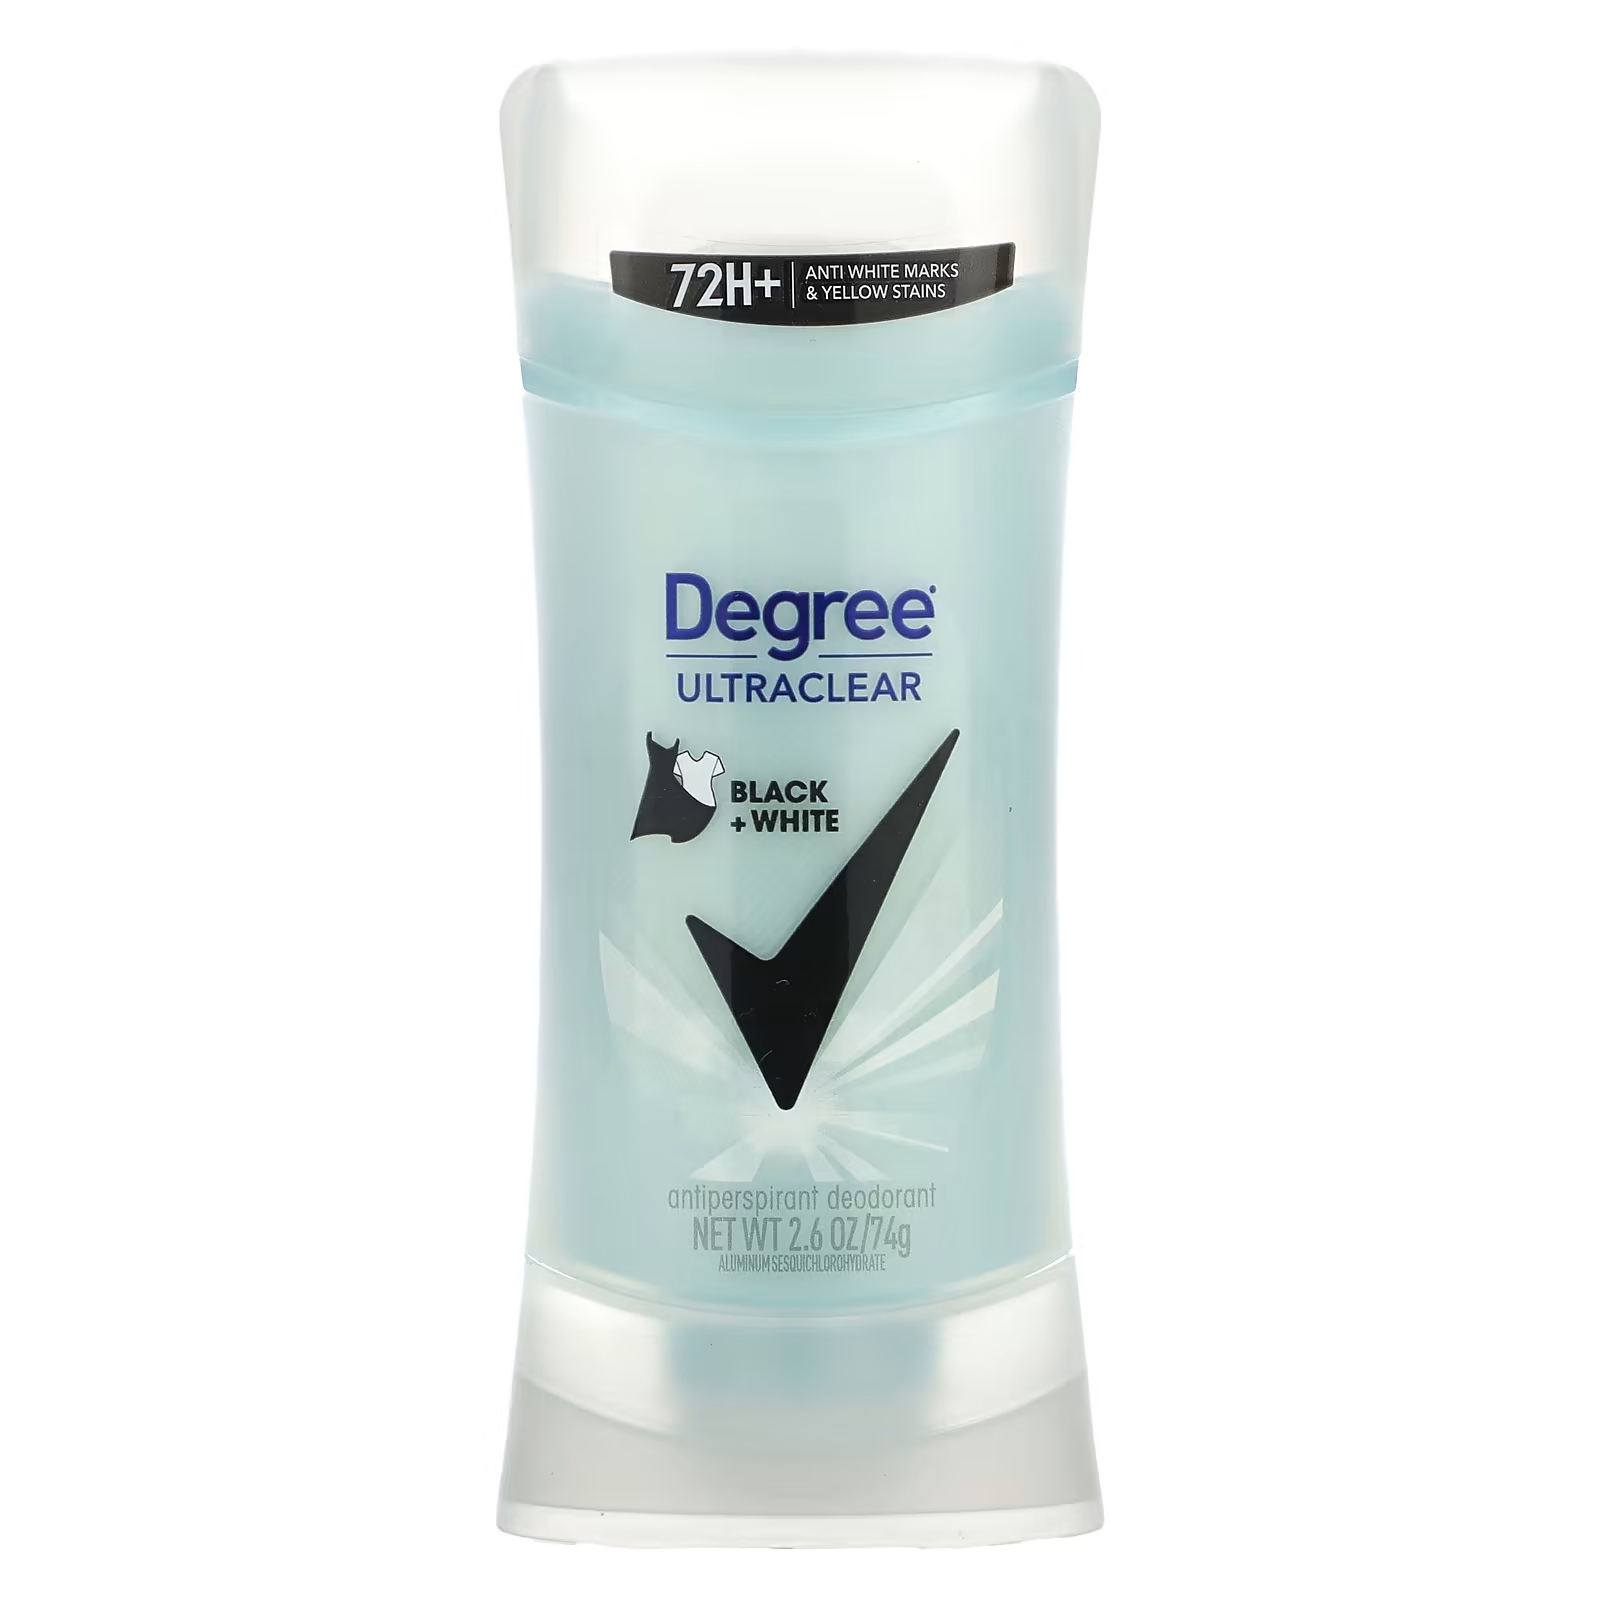 Дезодорант-антиперспирант Degree UltraClear Black + White degree advanced 72h motionsense дезодорант антиперспирант мята и полевые цветы 74 г 2 6 унции